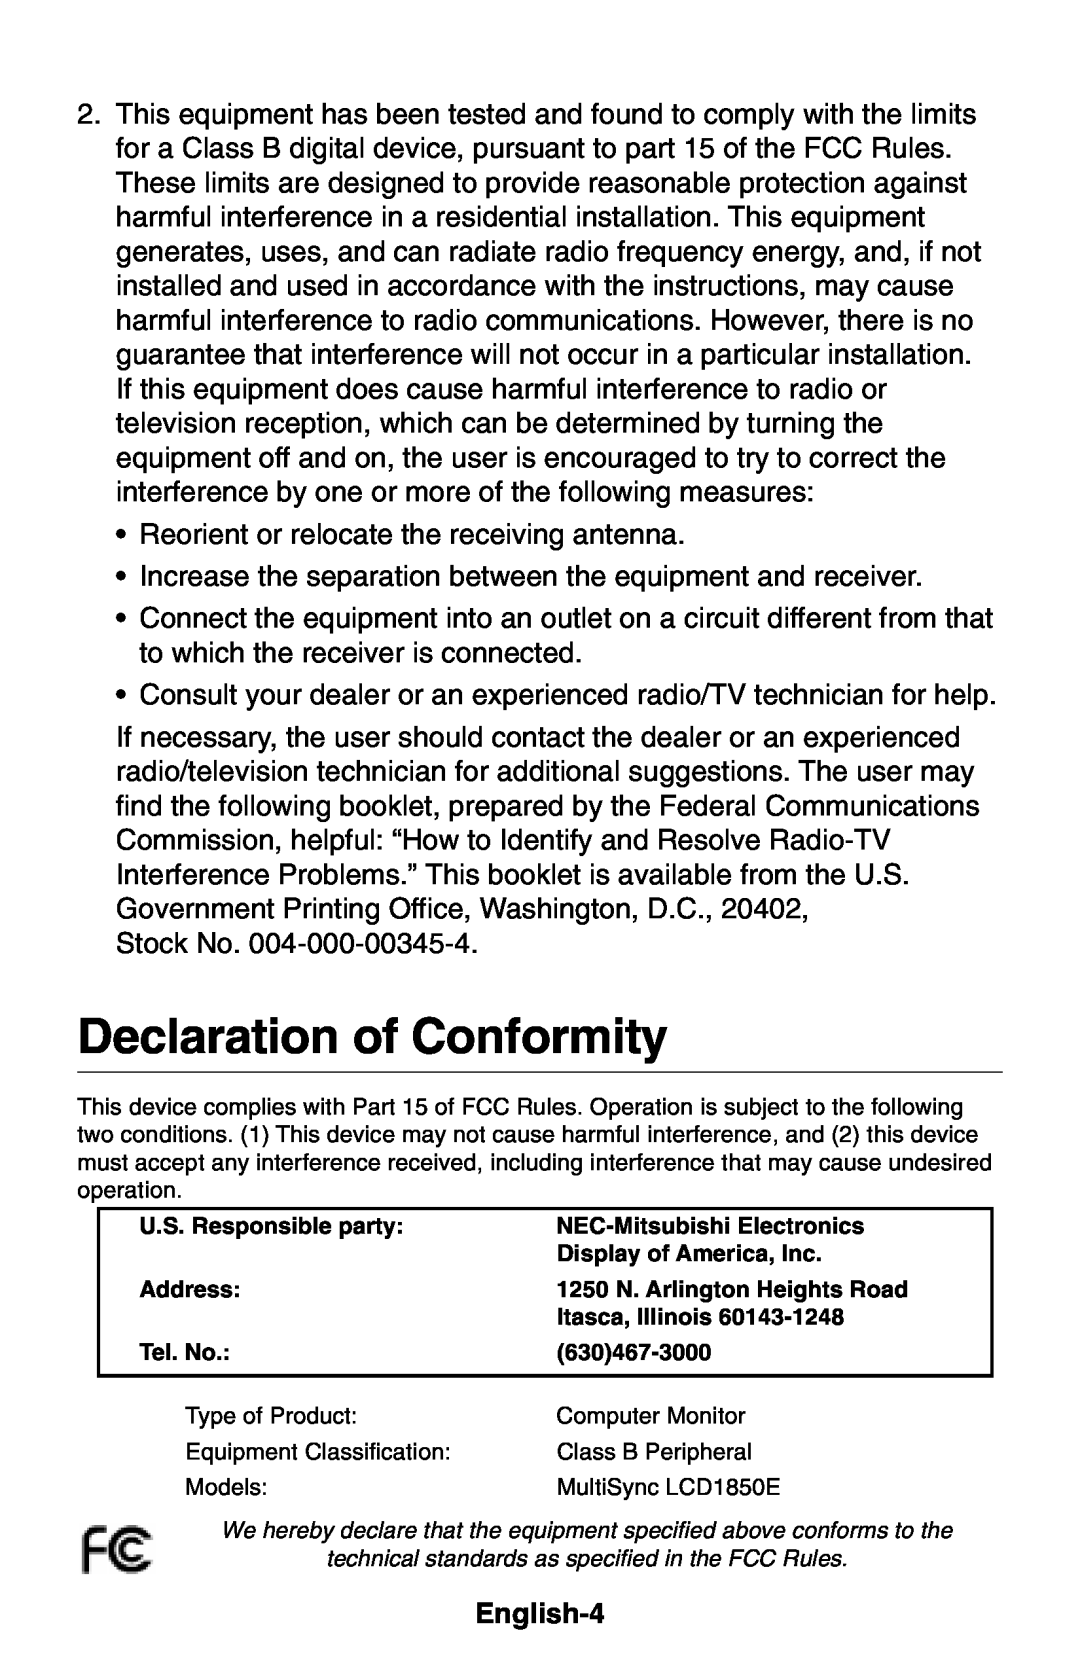 NEC LCD1850E user manual Declaration of Conformity, English-4 